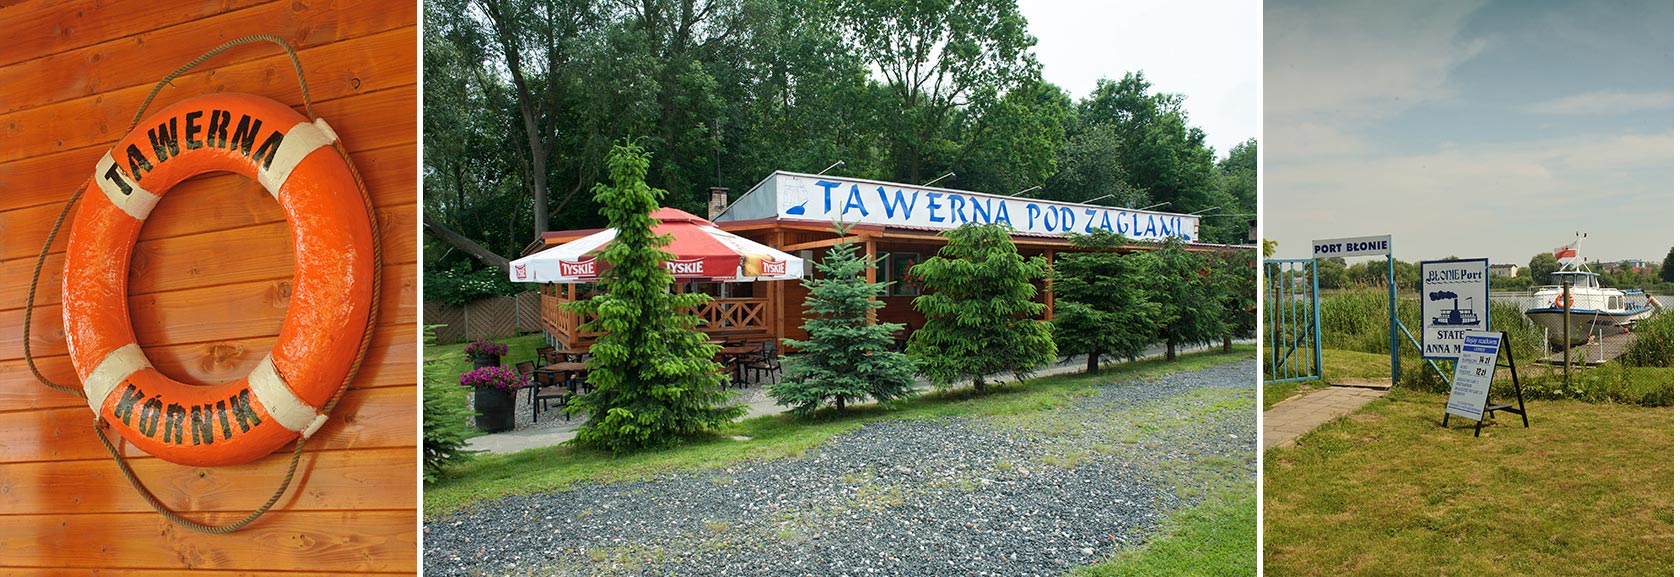 Restauracja Tawerna pod Żaglami - Kórnik